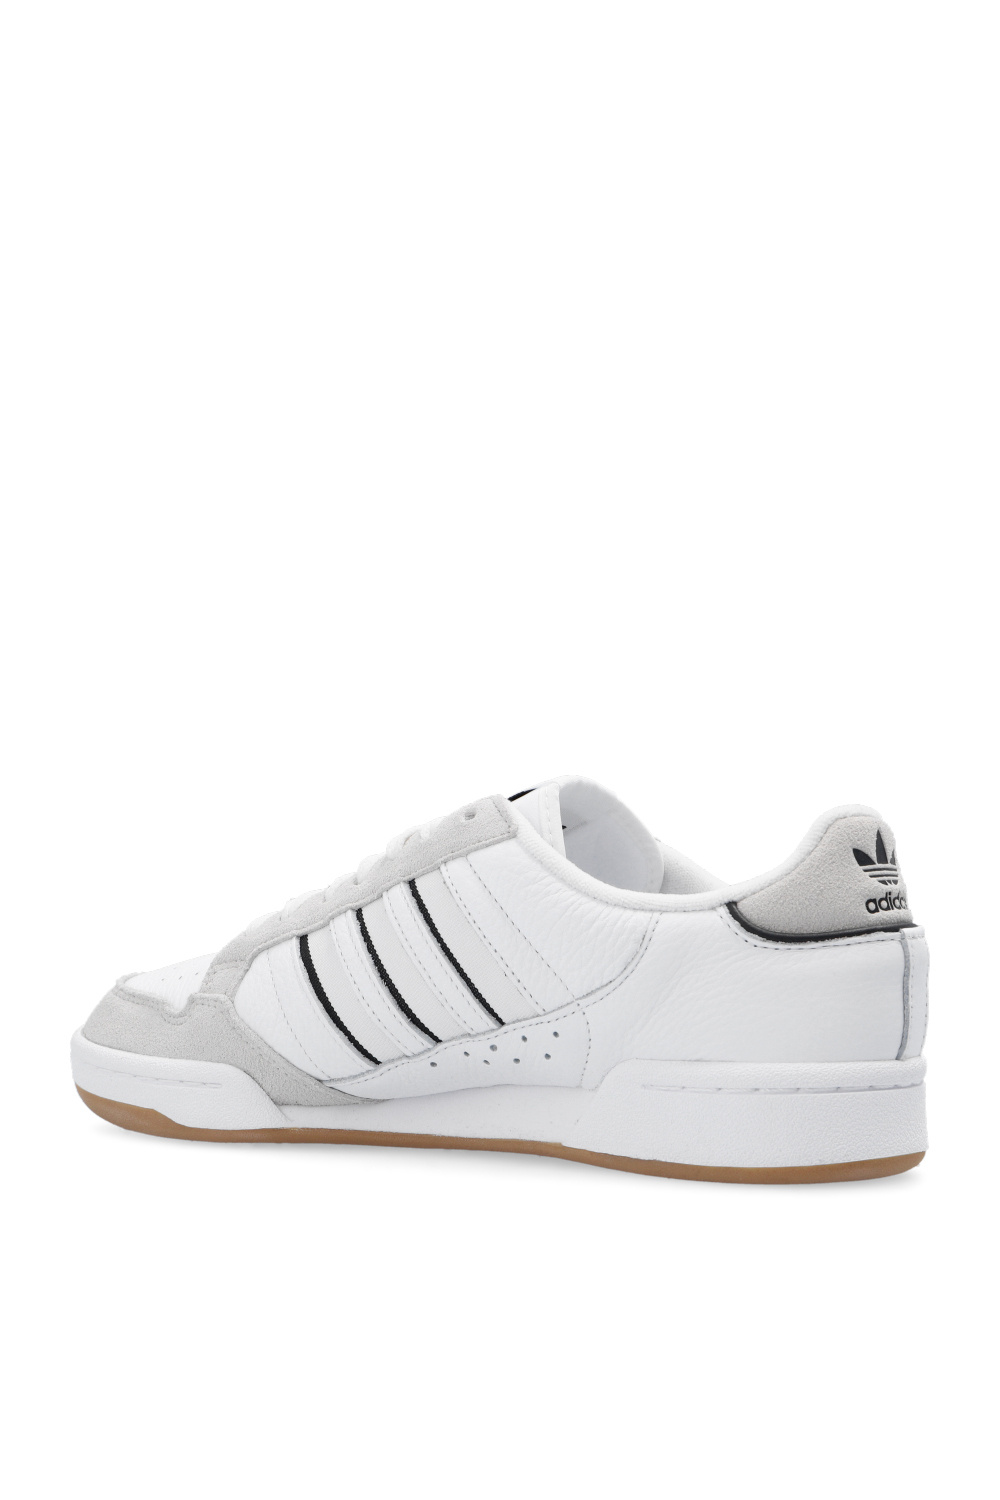 Beige \'Continental 80 Originals StclaircomoShops sneakers - Germany adidas Originals 2971 ADIDAS Stripes\' 